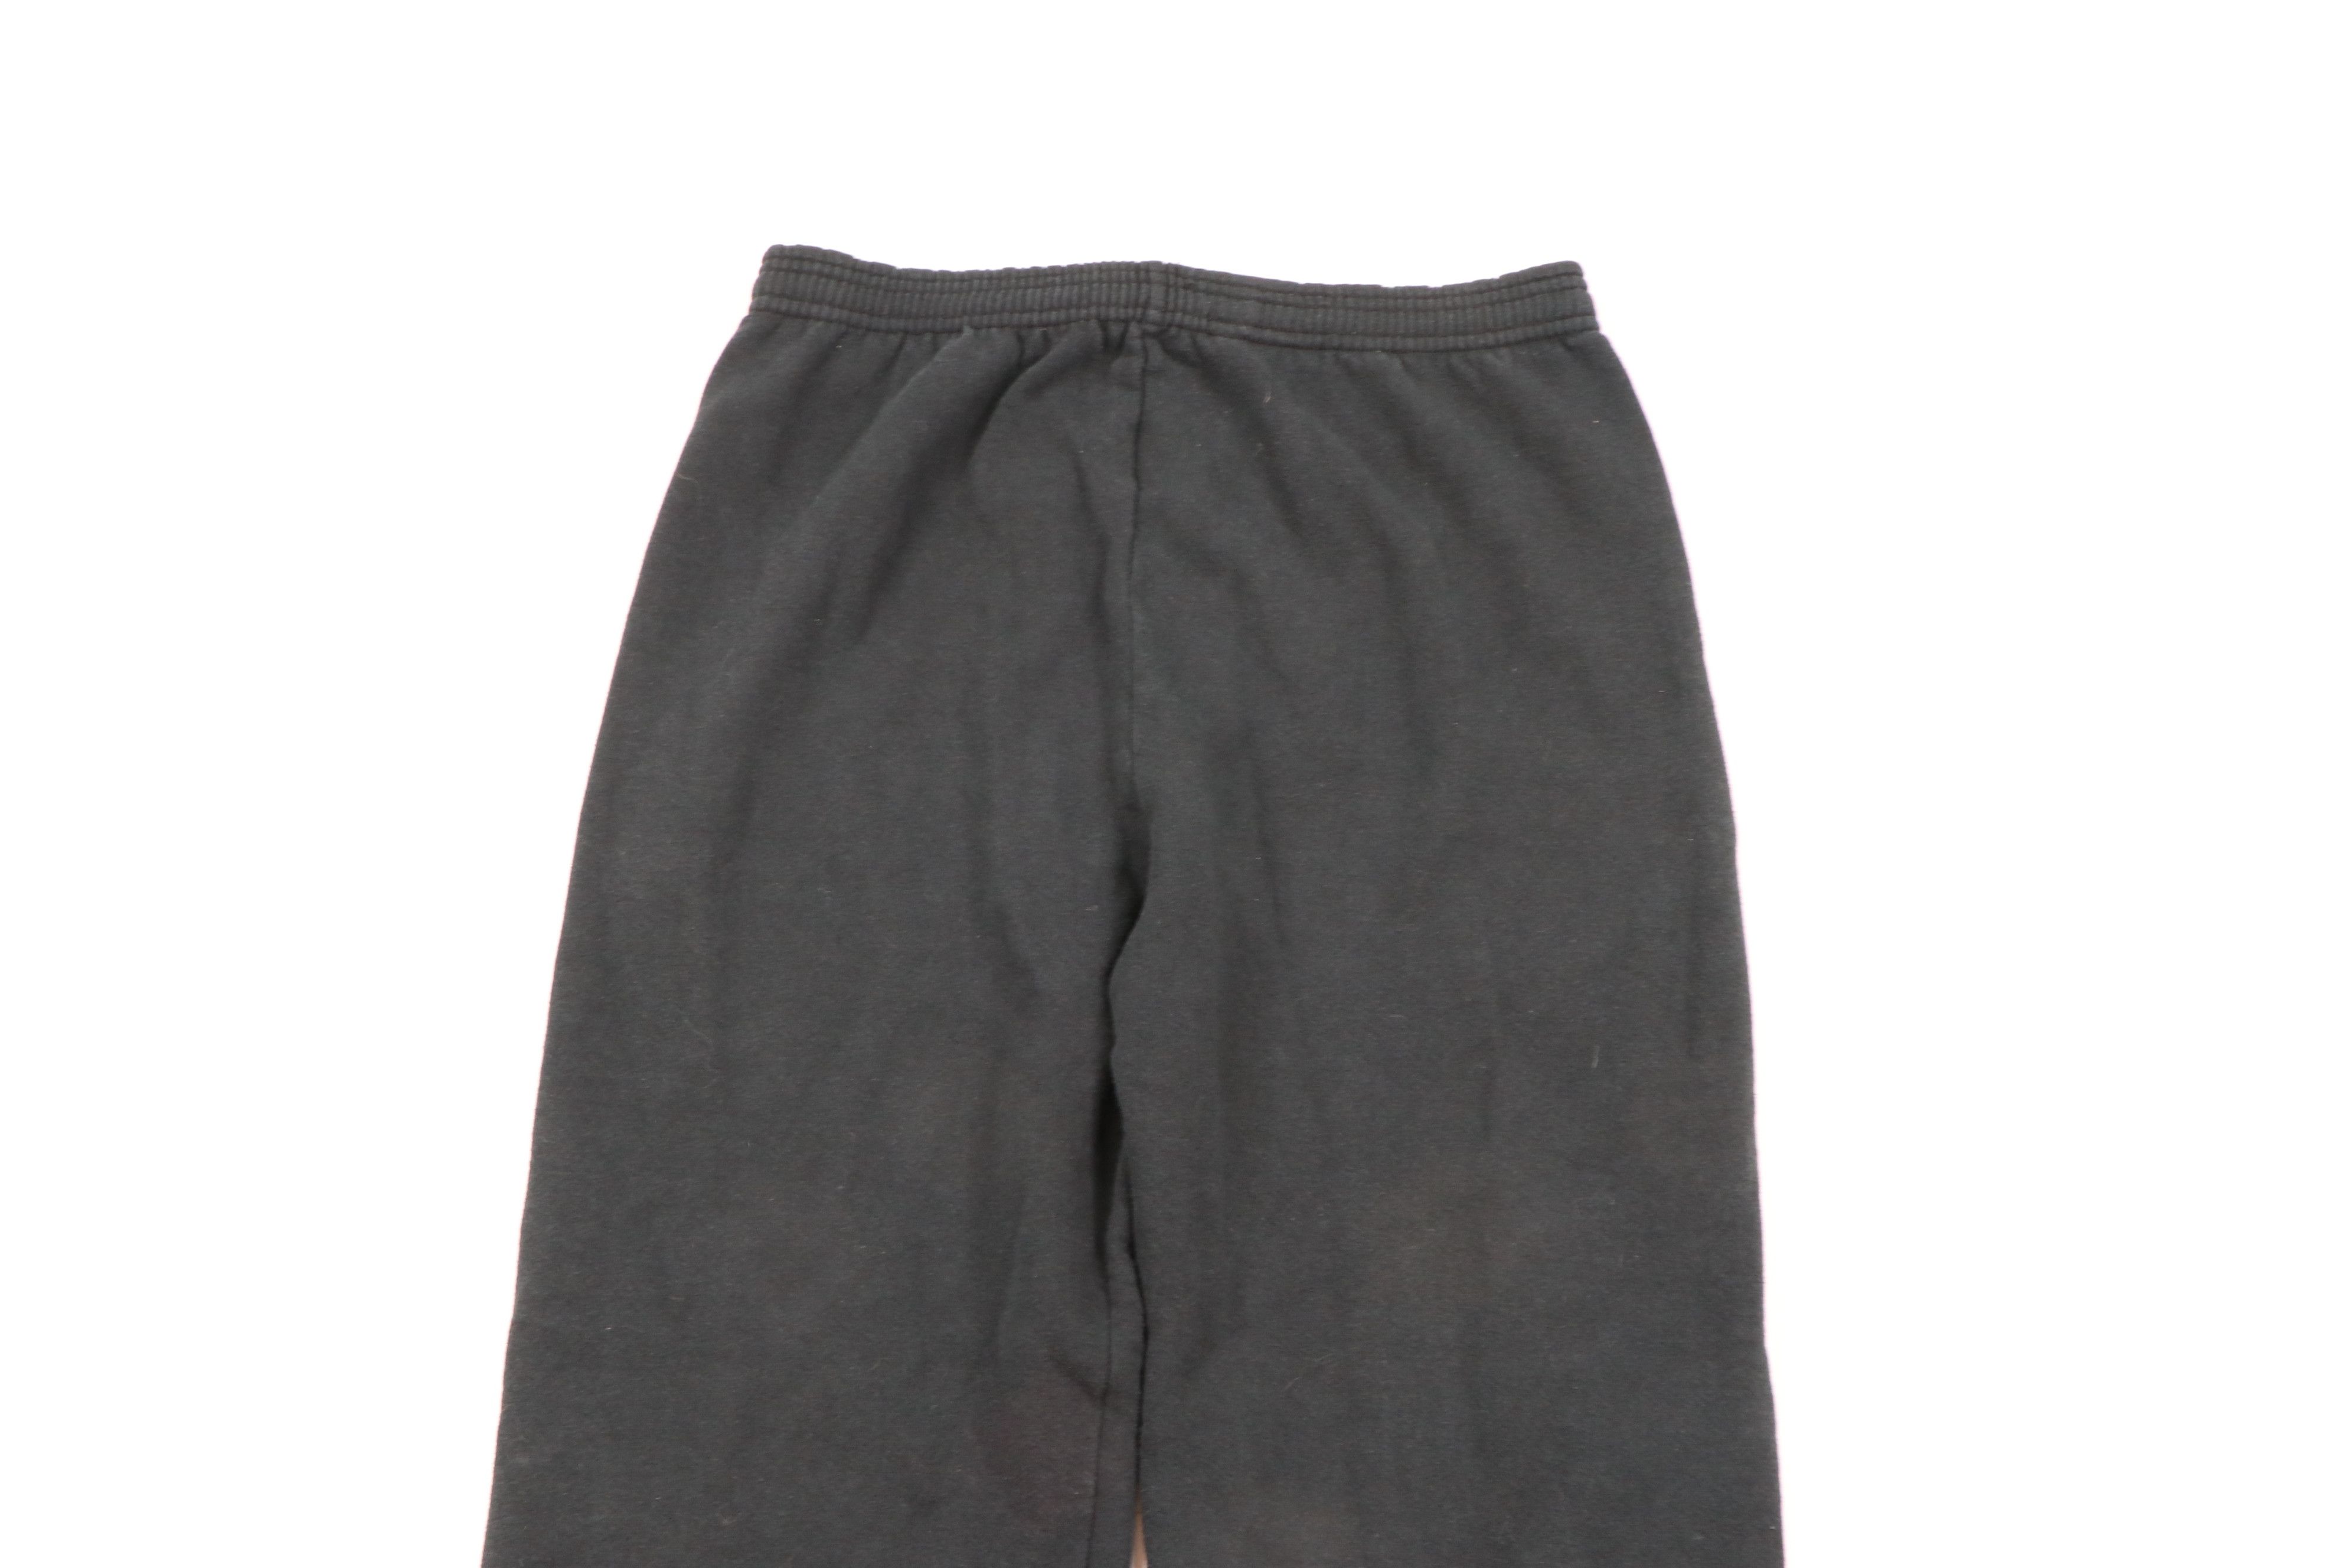 Vintage Vintage 90s Streetwear Faded Blank Sweatpants Joggers Pants Size US 36 / EU 52 - 6 Thumbnail